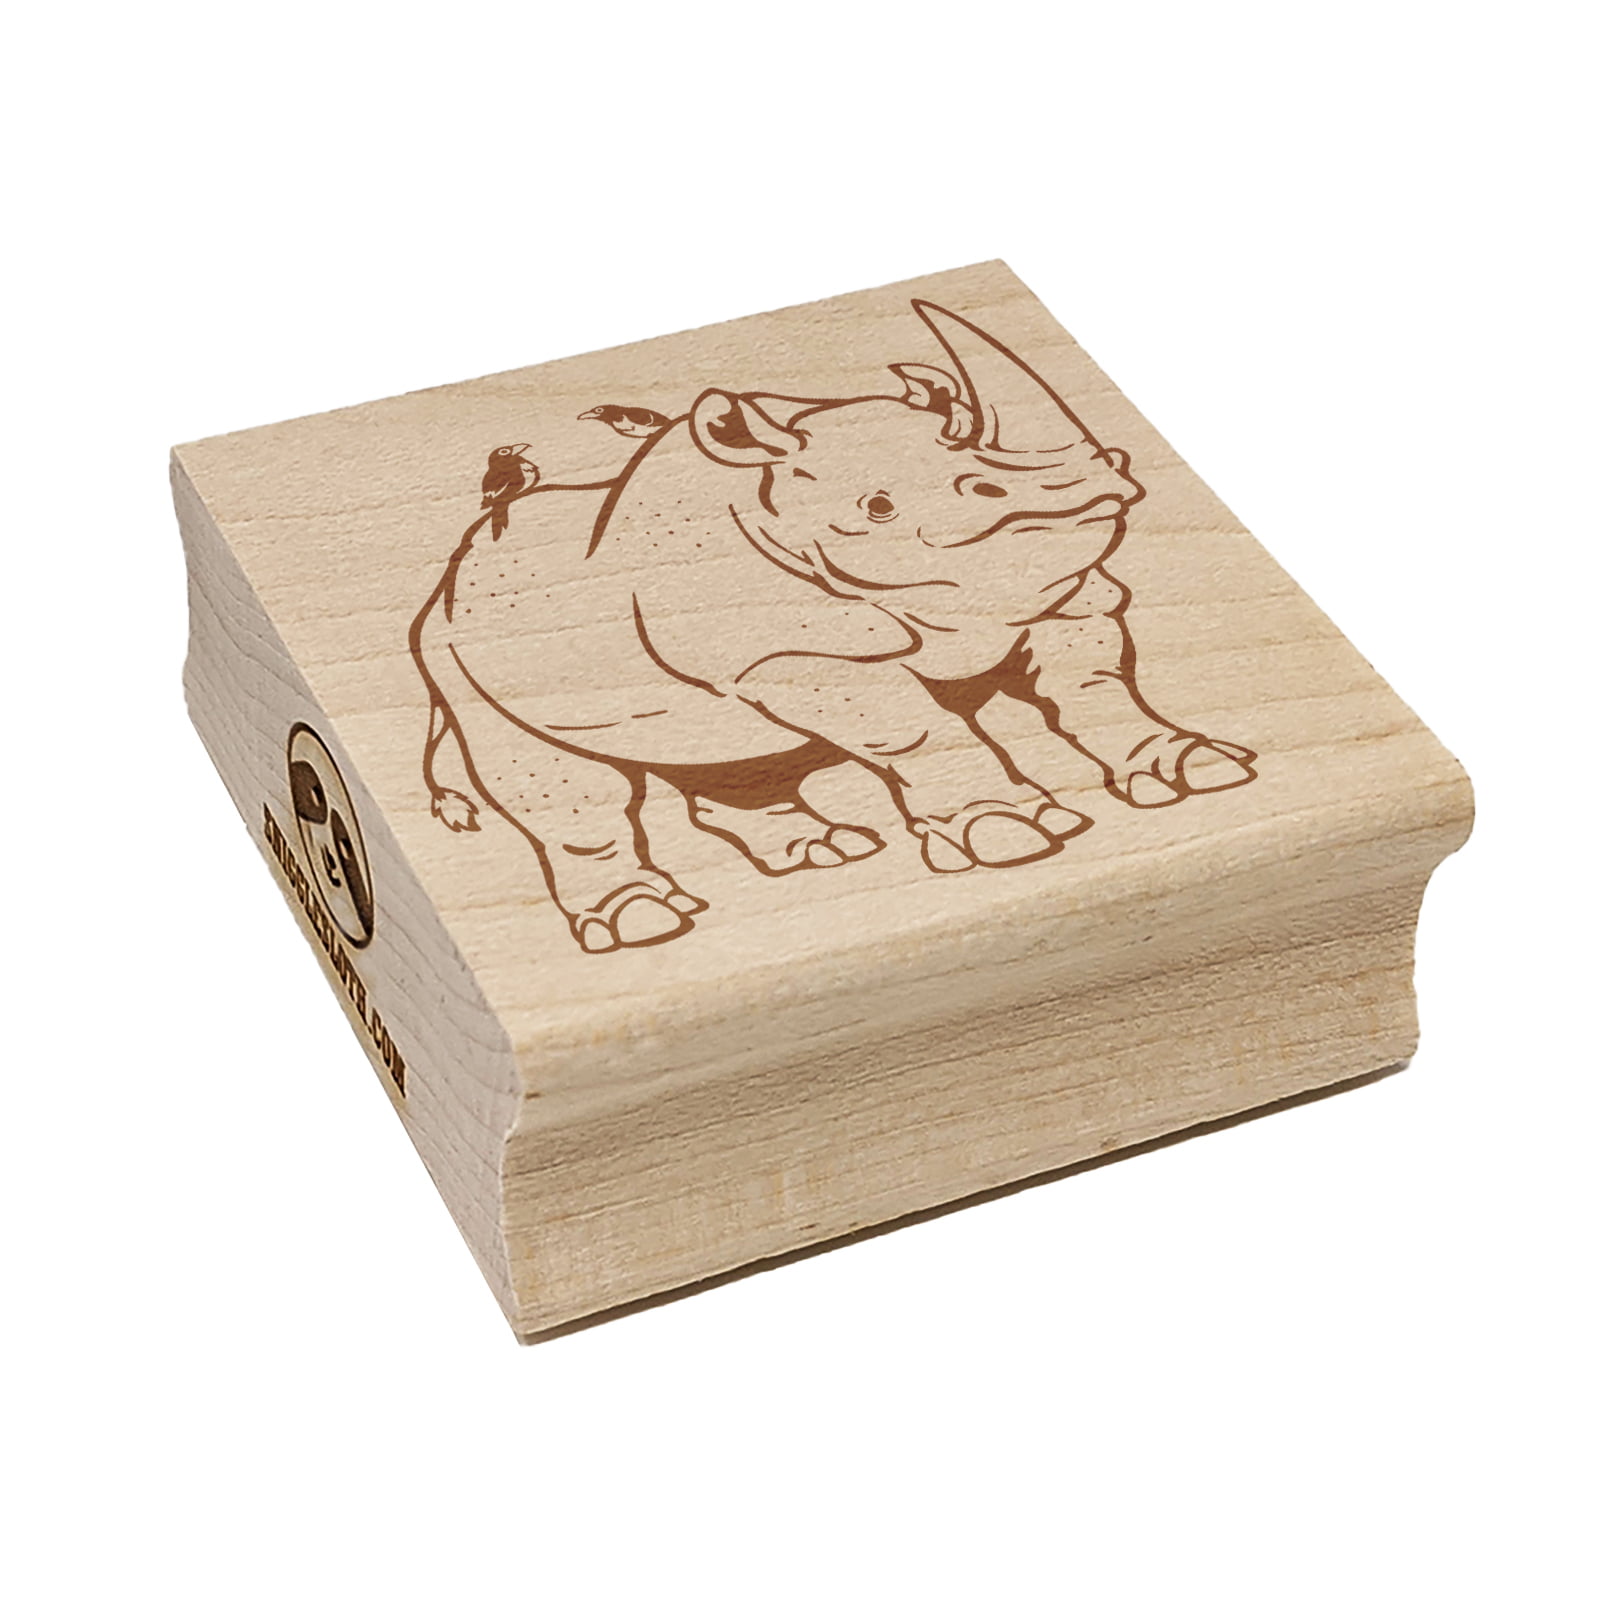 25 Rhinoceros Wooden Rubber Stamp No